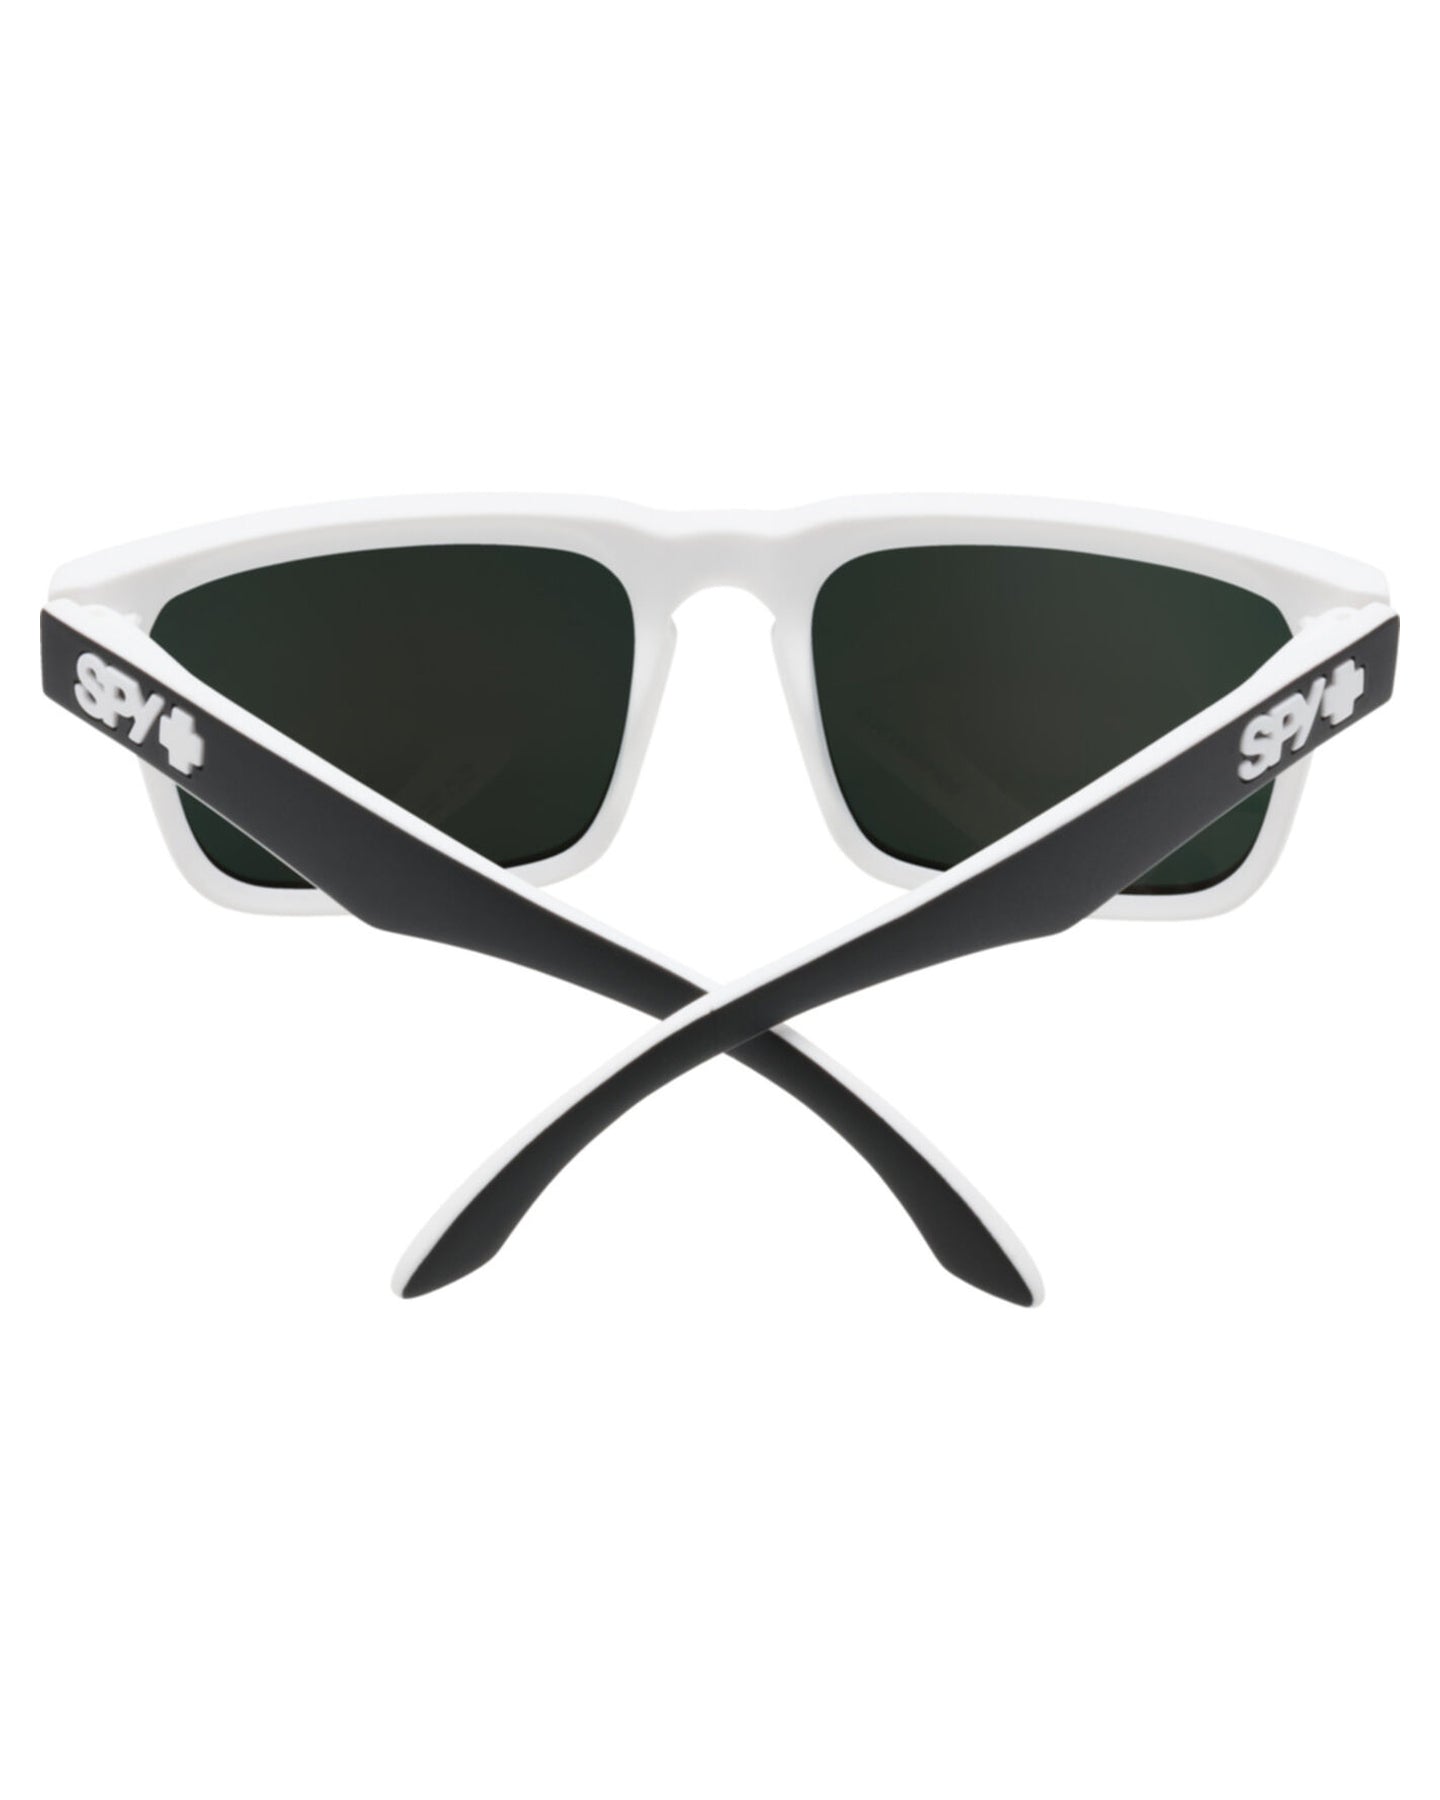 Spy Helm Whitewall - Happy Gray Green With Red Spectra Mirror Sunglasses - Trojan Wake Ski Snow